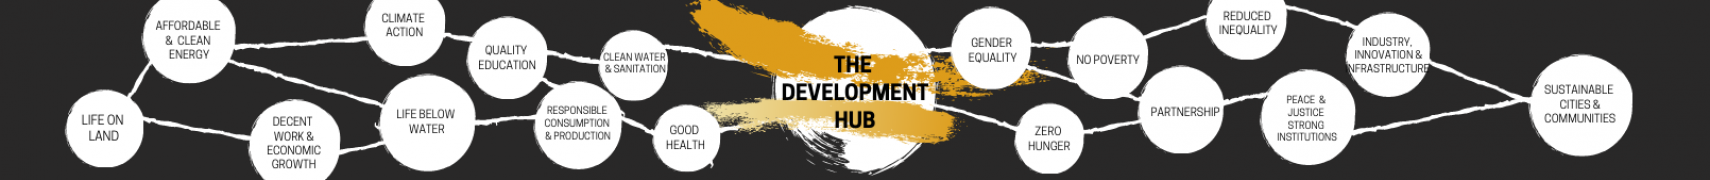 The Development Hub